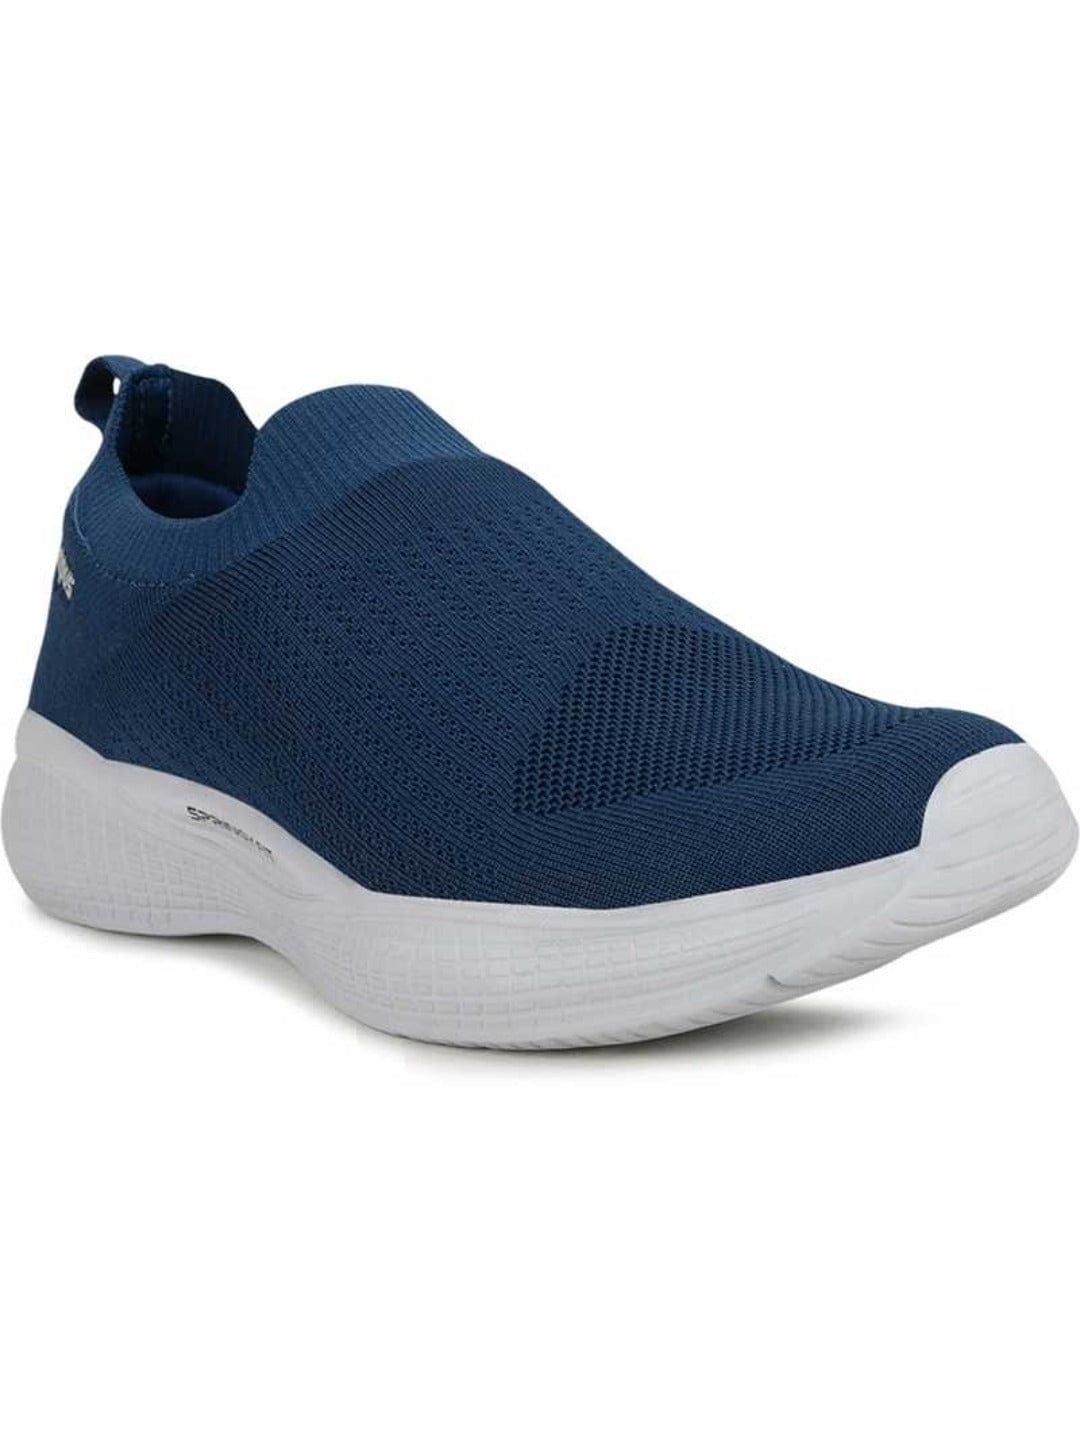 CAMPUS BOOMER (N) Running Shoes For Men - Buy CAMPUS BOOMER (N) Running  Shoes For Men Online at Best Price - Shop Online for Footwears in India |  Flipkart.com